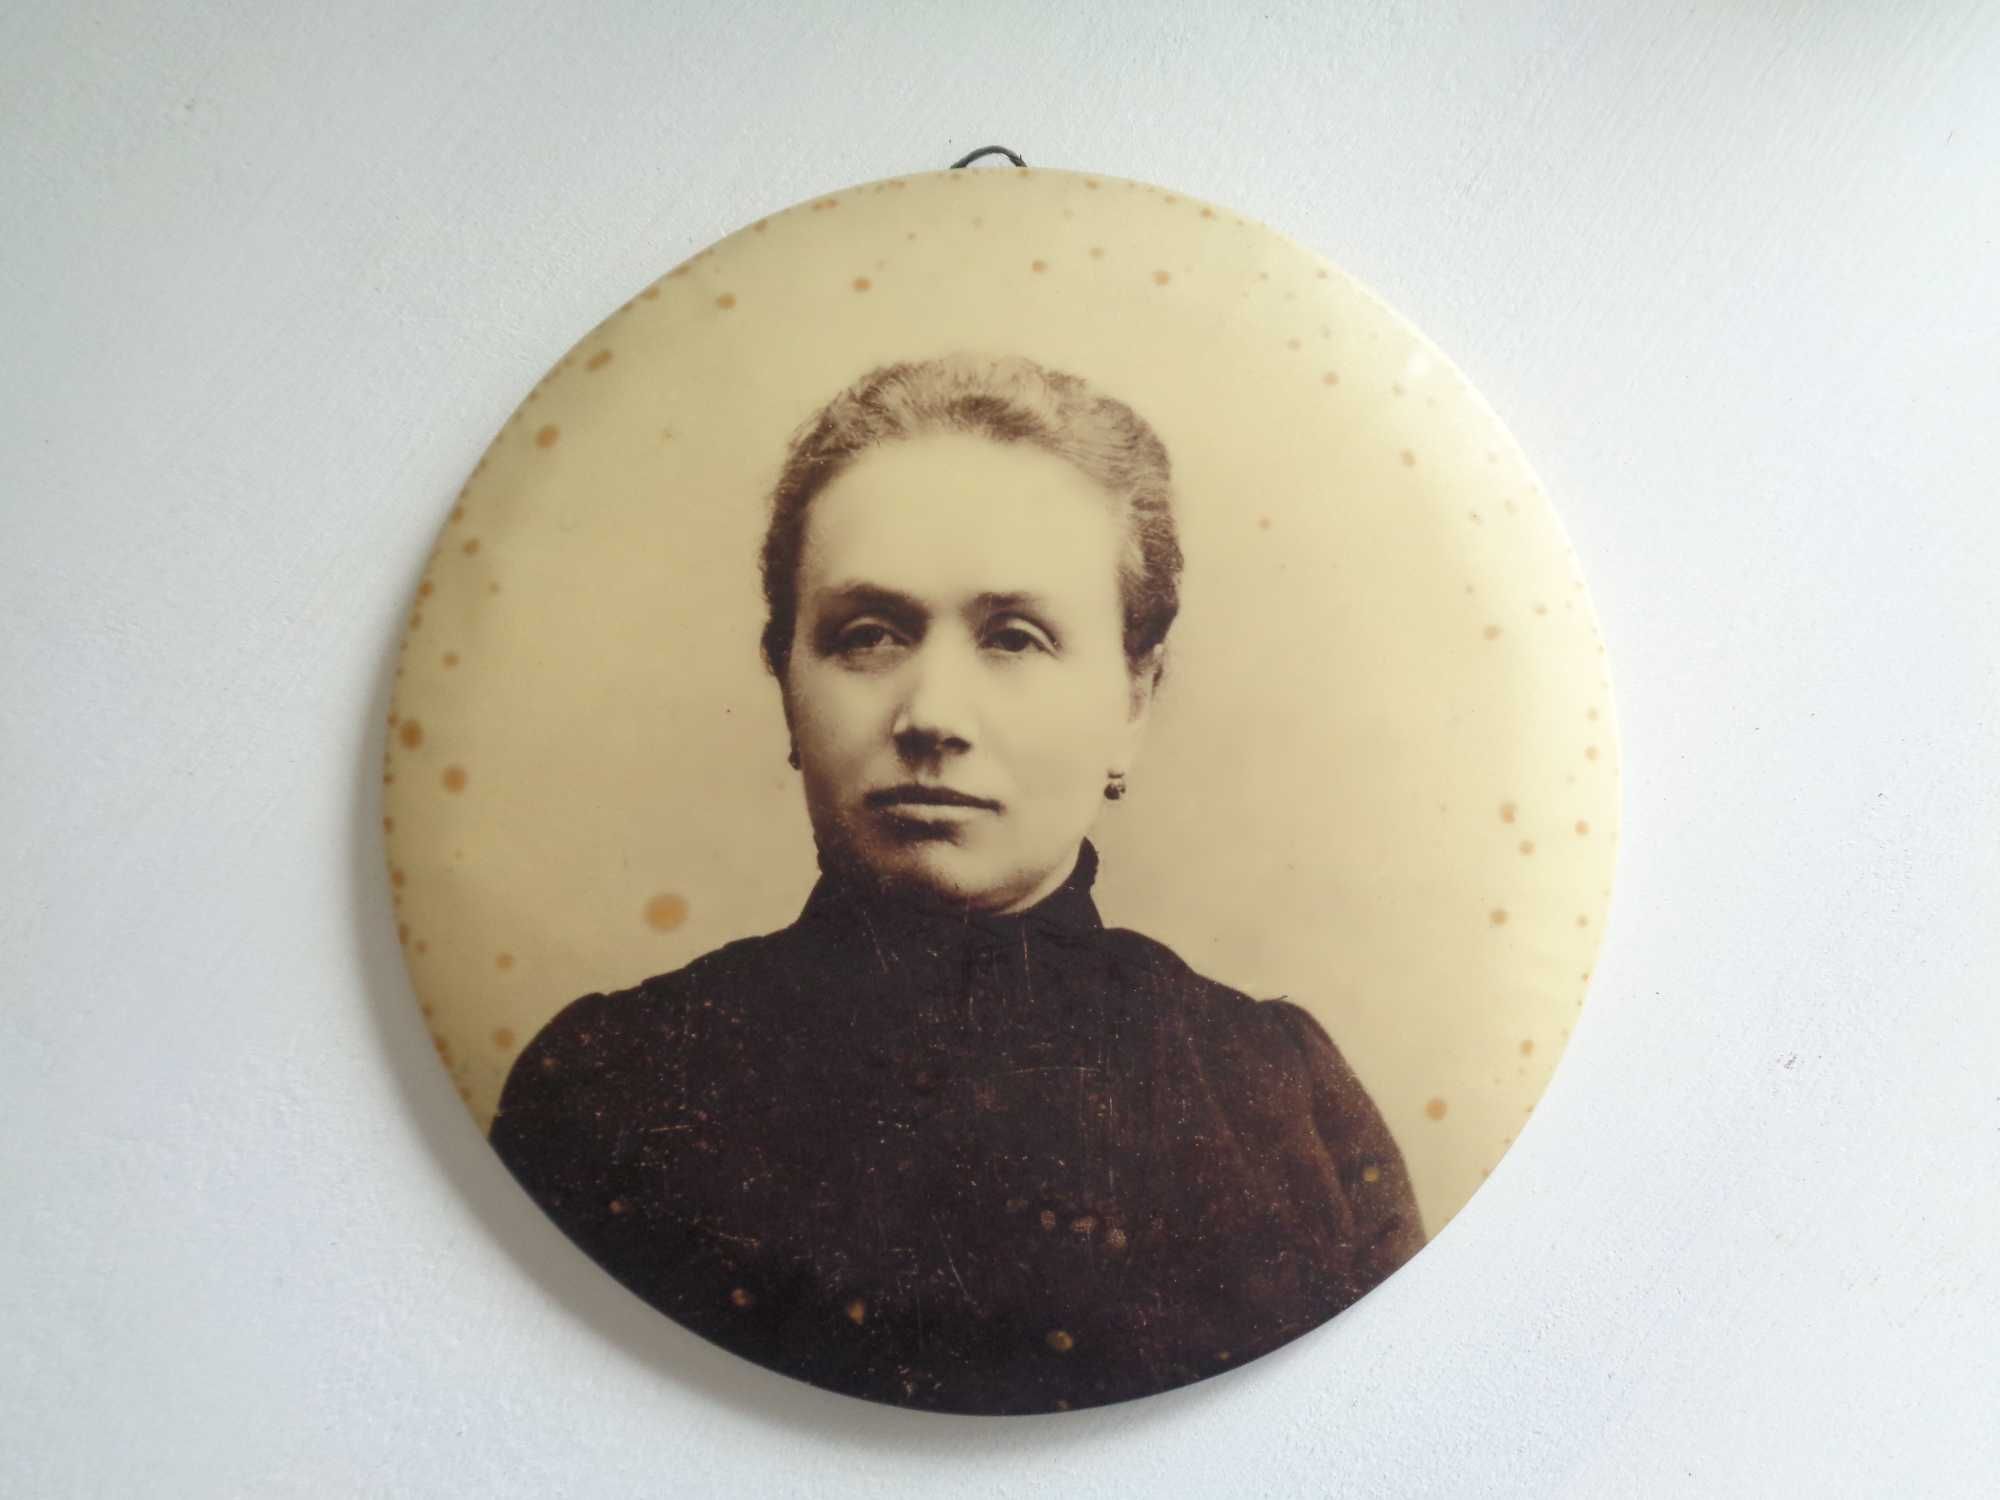 Portret mlodej kobiety - stara okragla fotografia na blasze - 15,3 cm